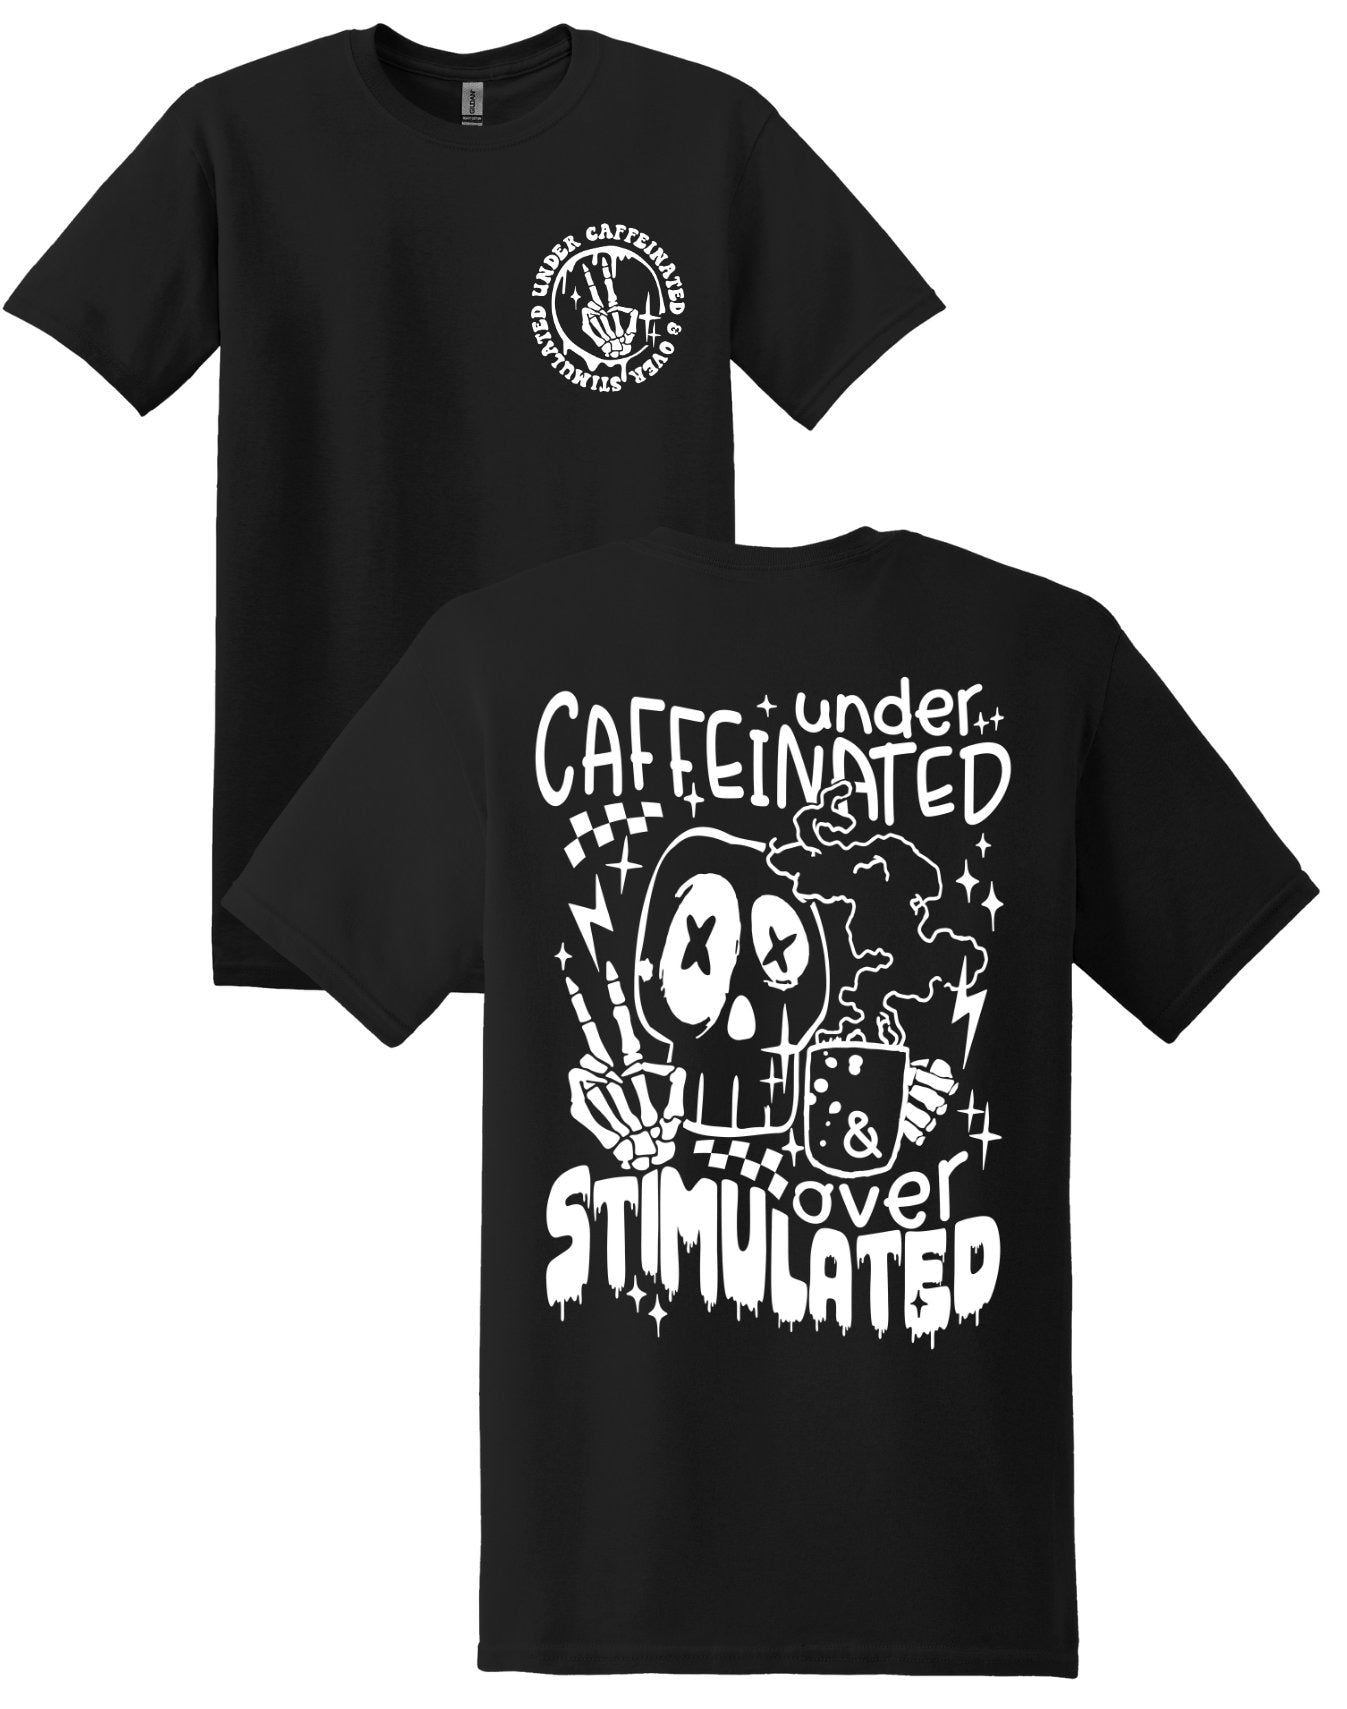 Under Caffeinated and Overstimulated; Long Sleeve & Short Sleeve Cotton Shirt, Unisex Style Options, Adult Tee